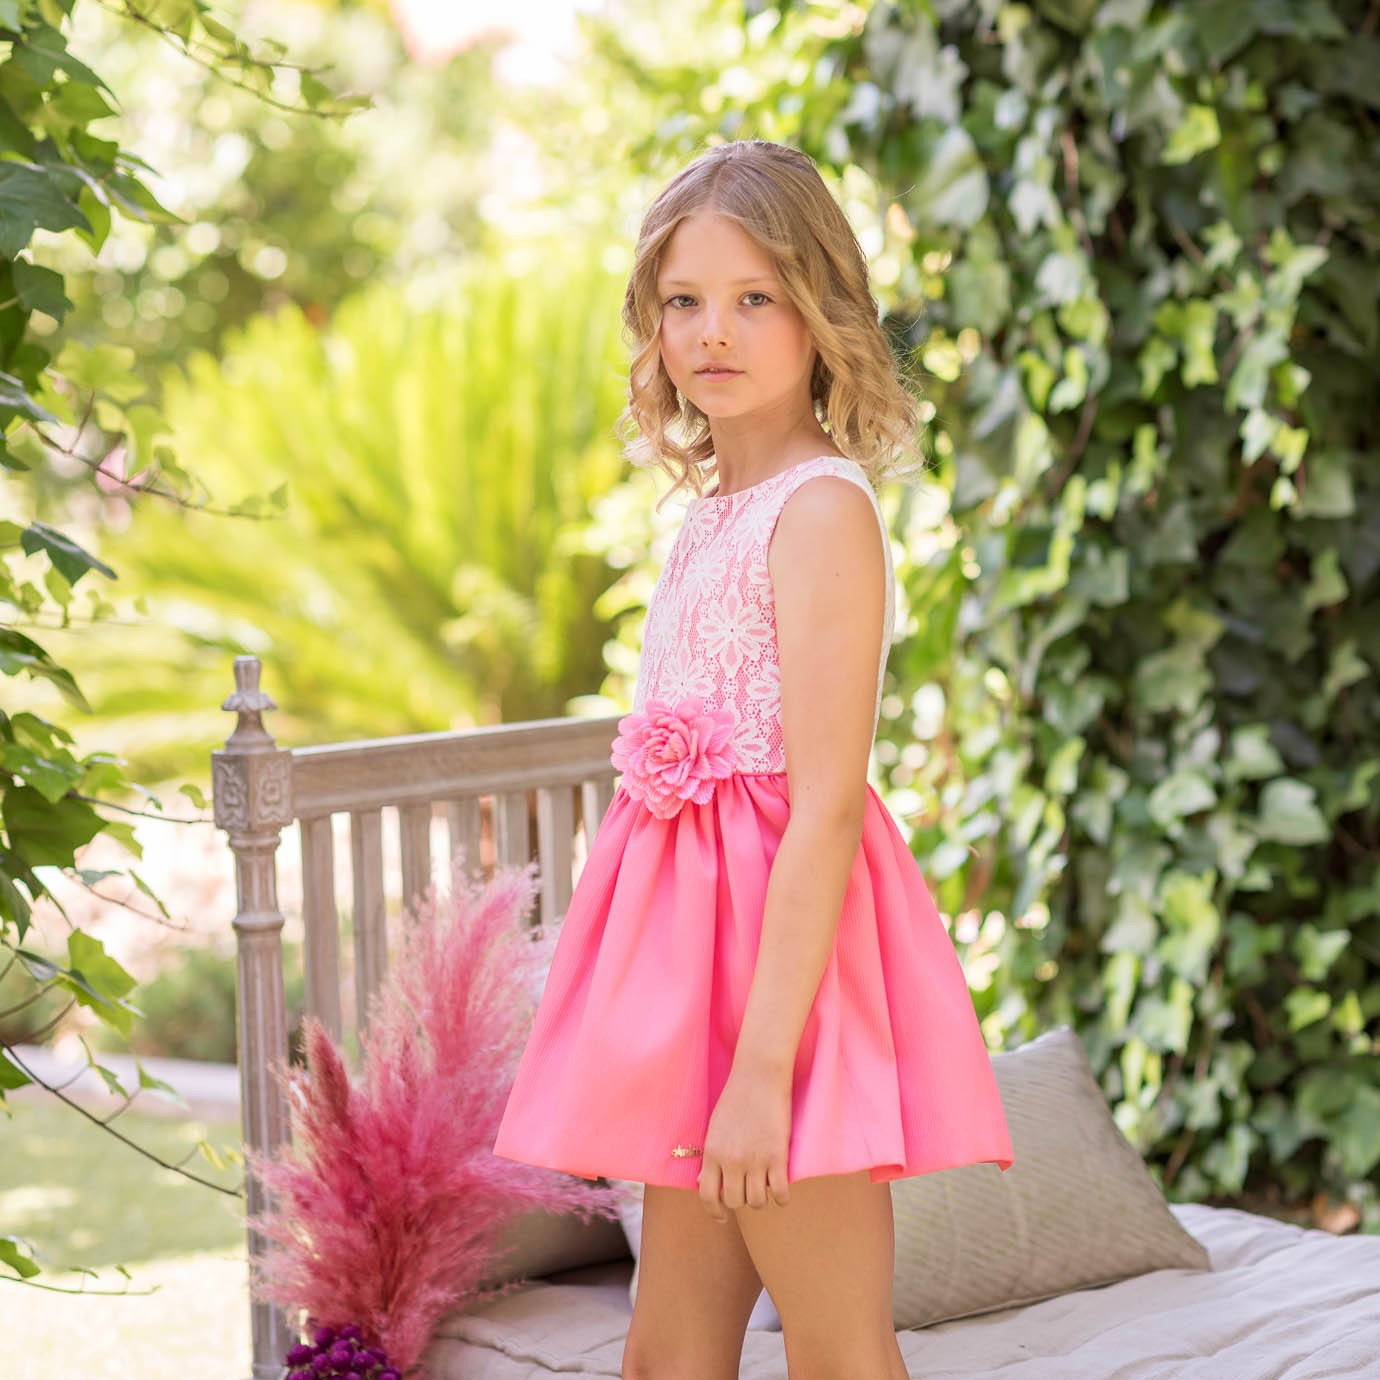 AdrielsModa Infantil on "¡Vestidos para #niña de #DolcePetit! Dolce Aela - Vestido coral para niña a 55,99 € disponible en https://t.co/eiJzOyMgLR Twitter